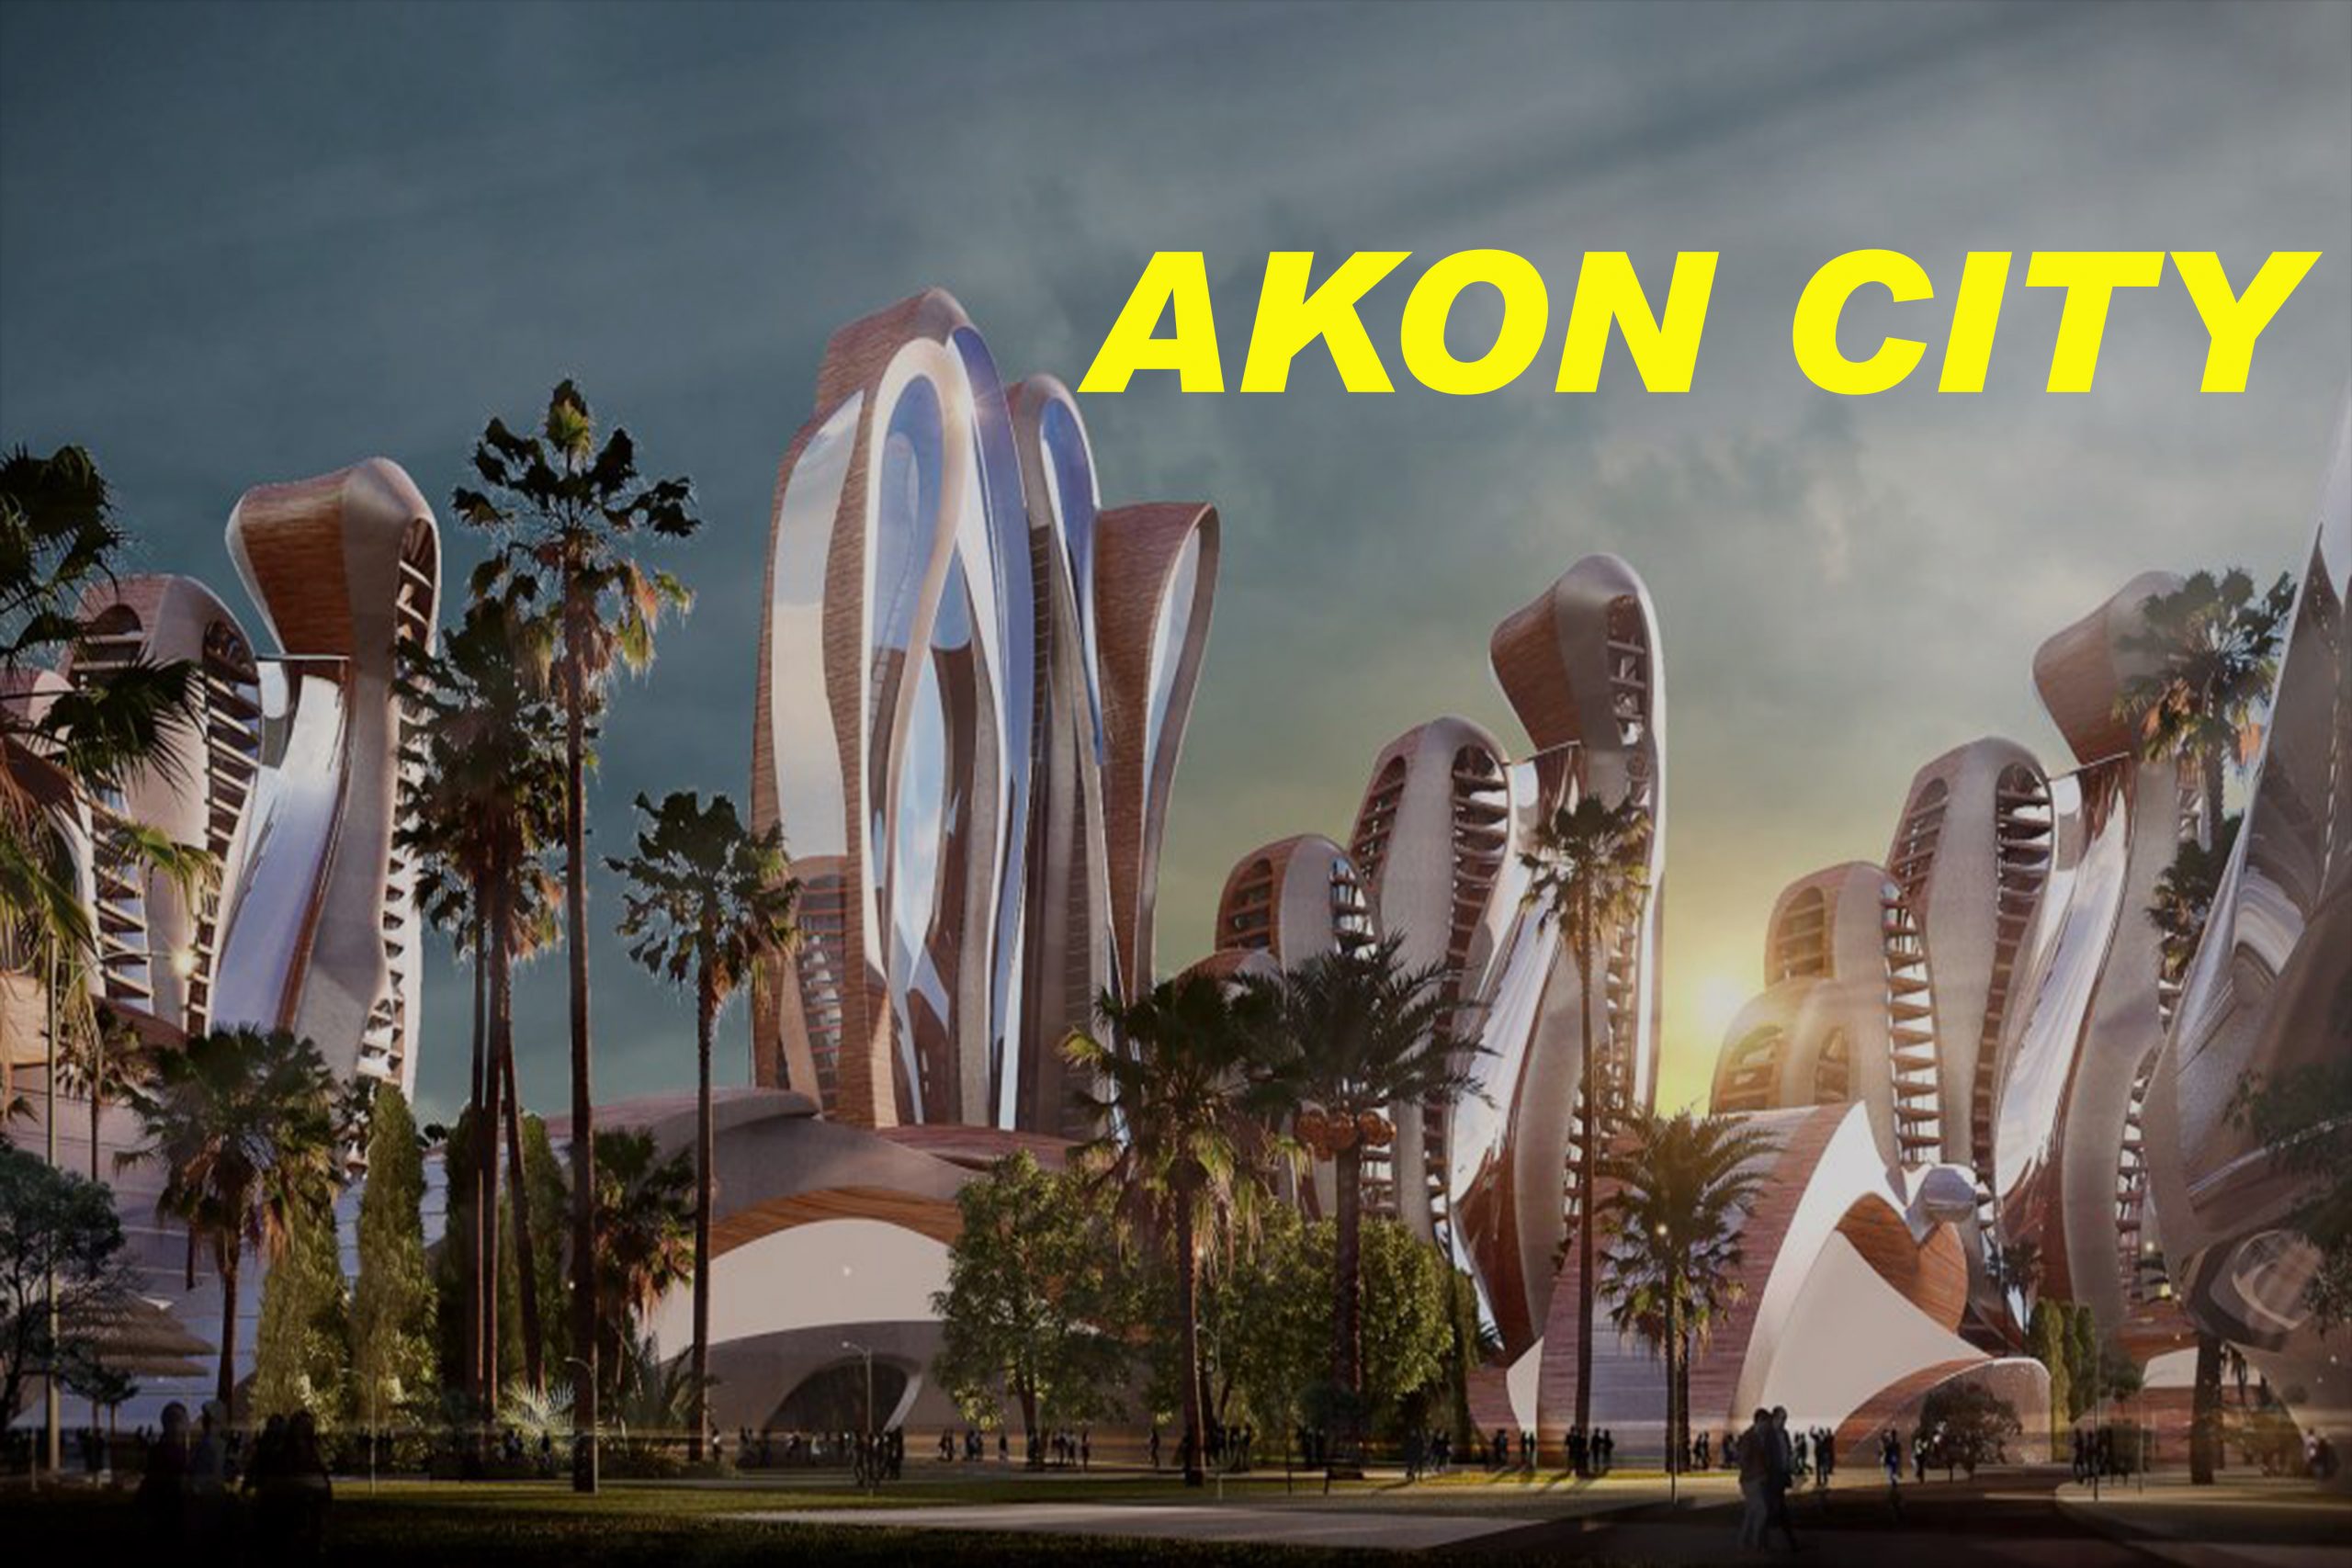 Akon city  for senegal